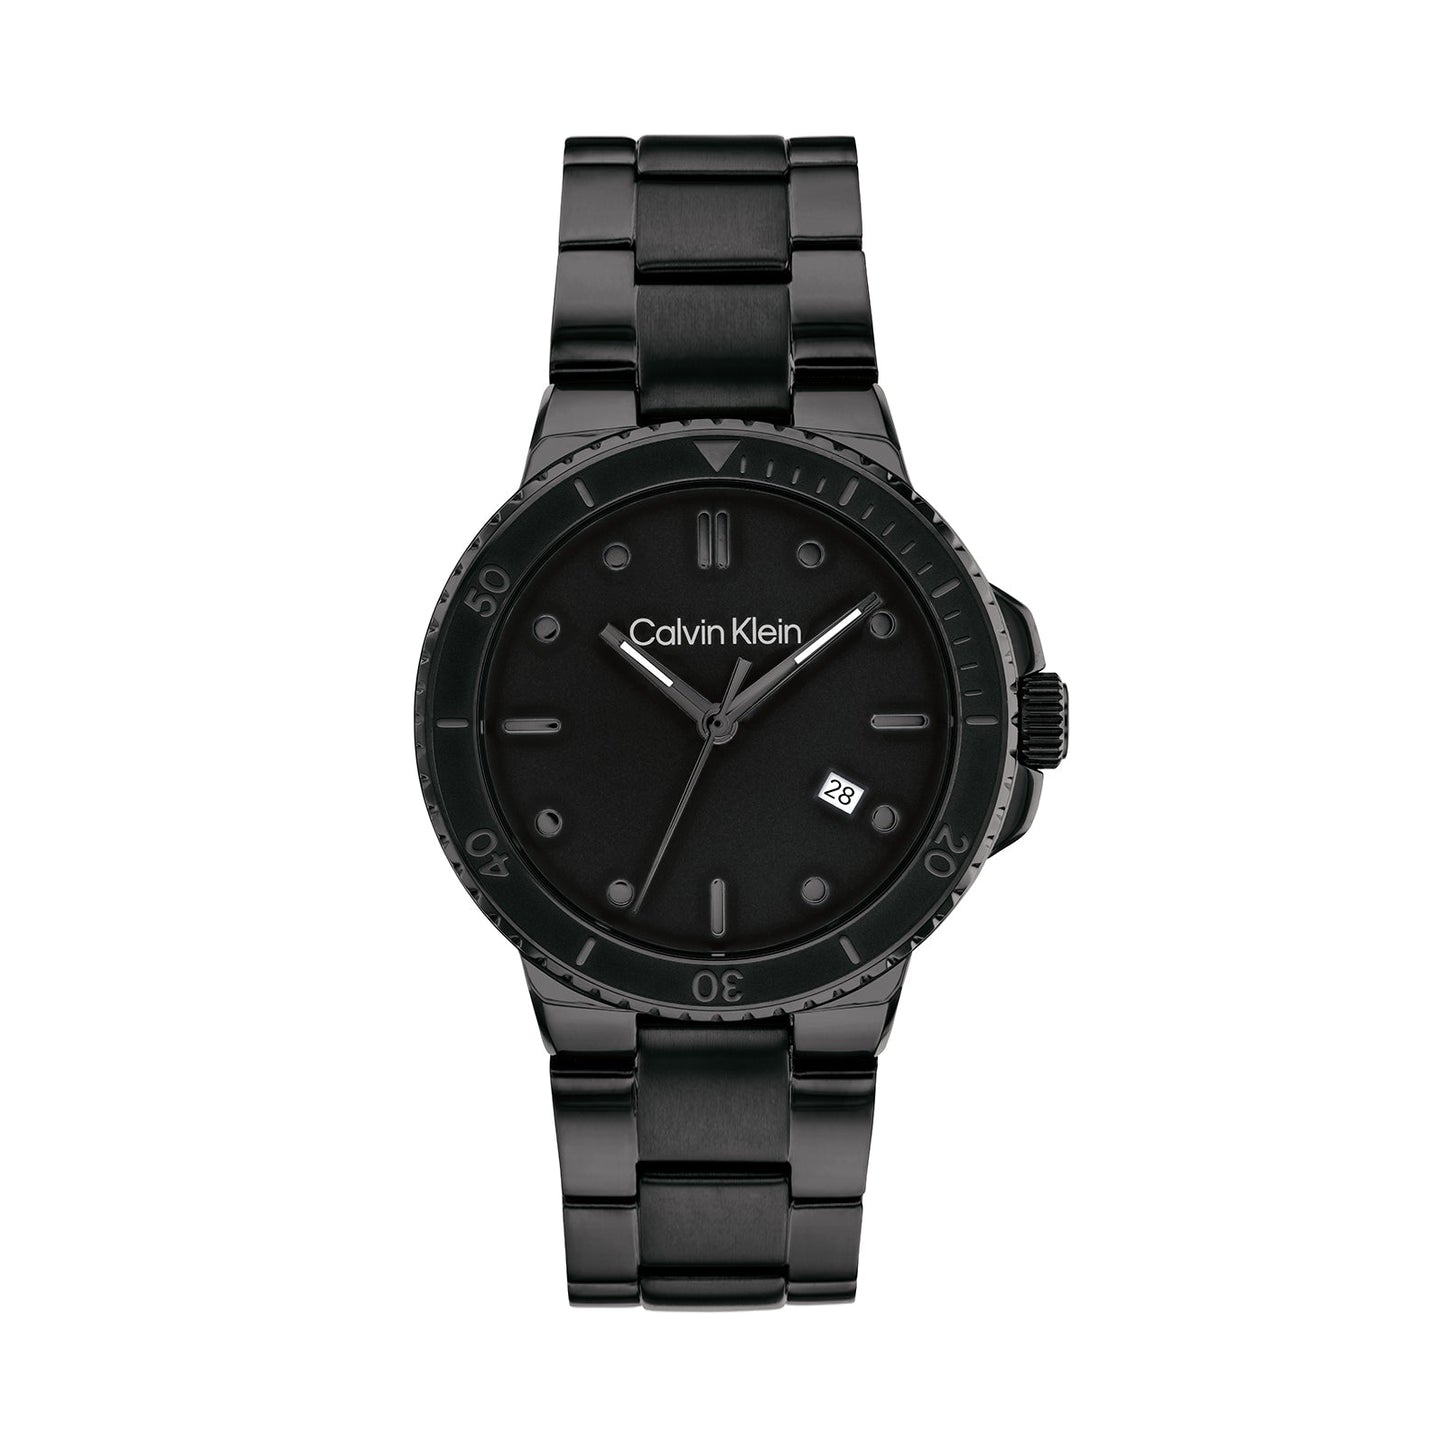 Calvin Klein 25200205 Men's Steel Watch